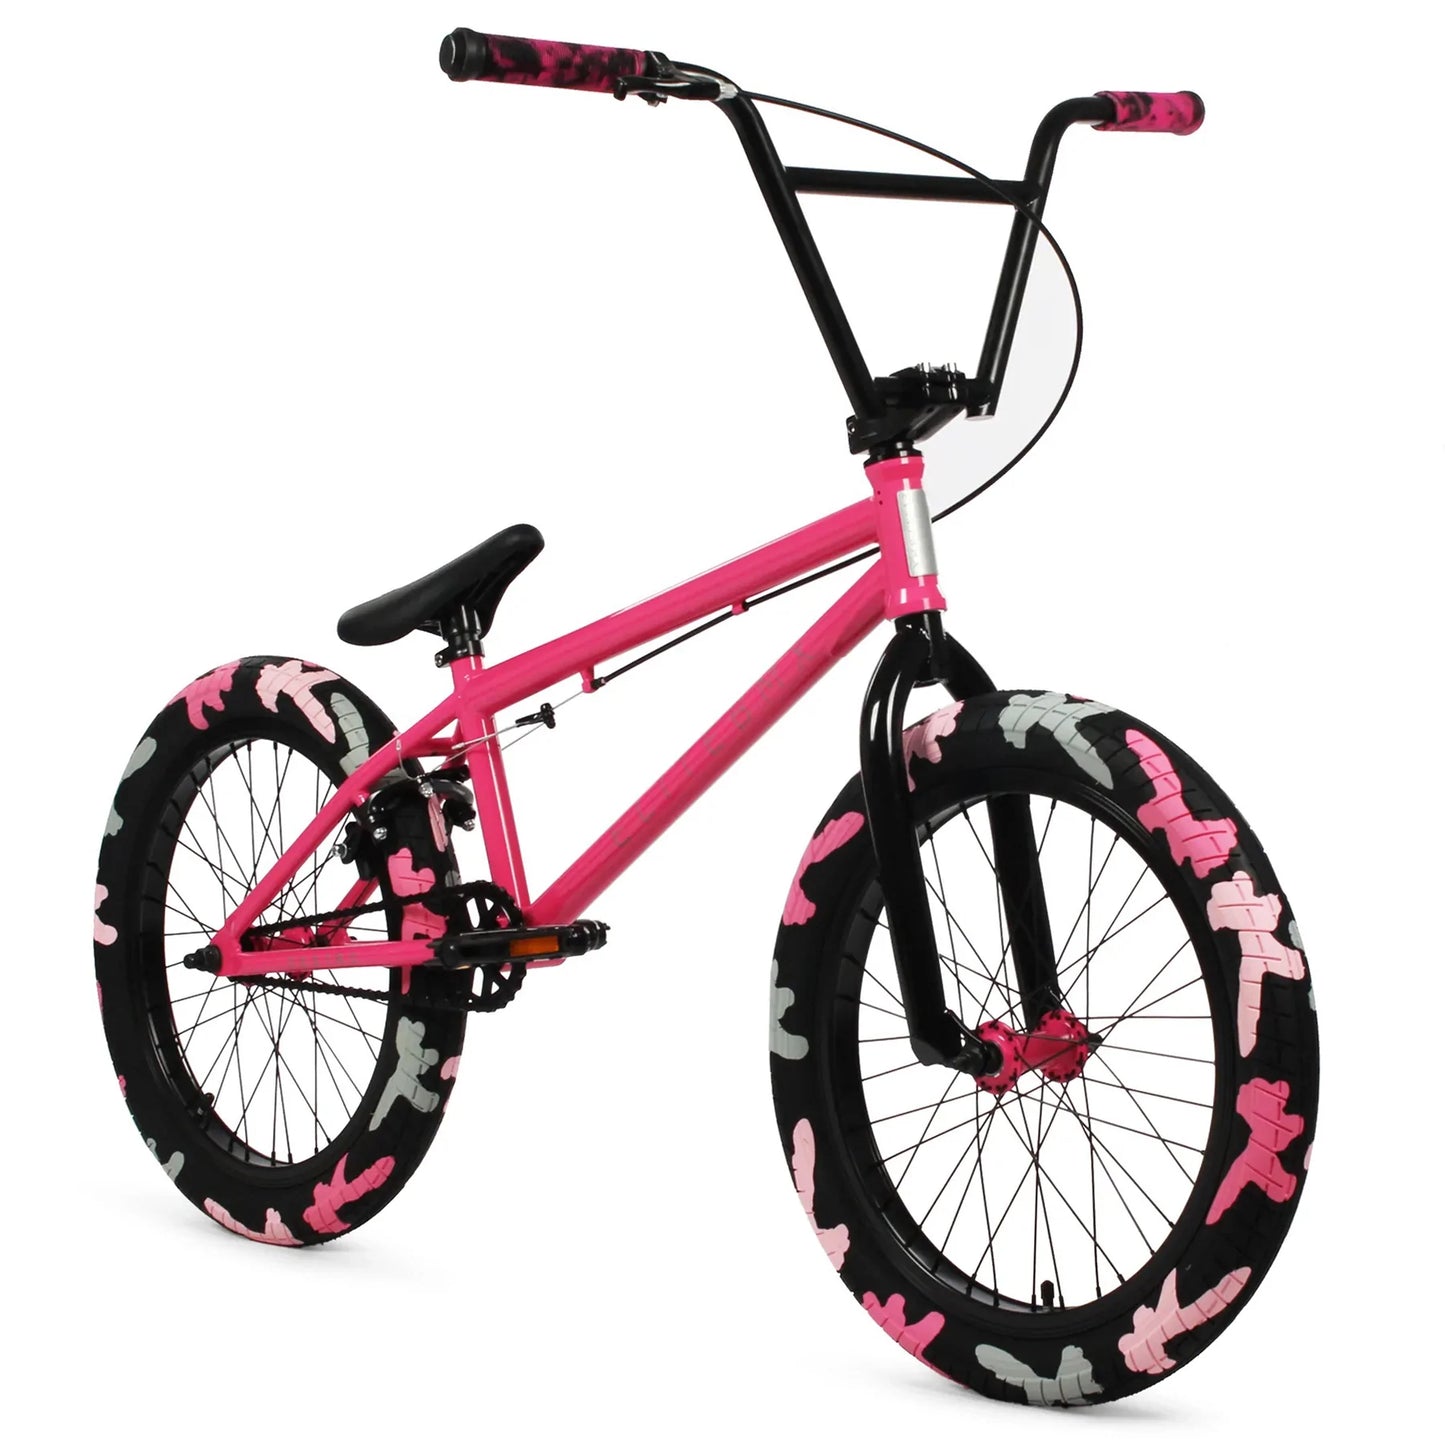 Destro BMX Bike - Pink Combat | Elite BMX Destro Bikes | Desto Bike | Elite BMX Bike | BMX Bikes | Elite Bikes | Affordable Bikes | Affordable BMX Bikes | Bike Lovers USA